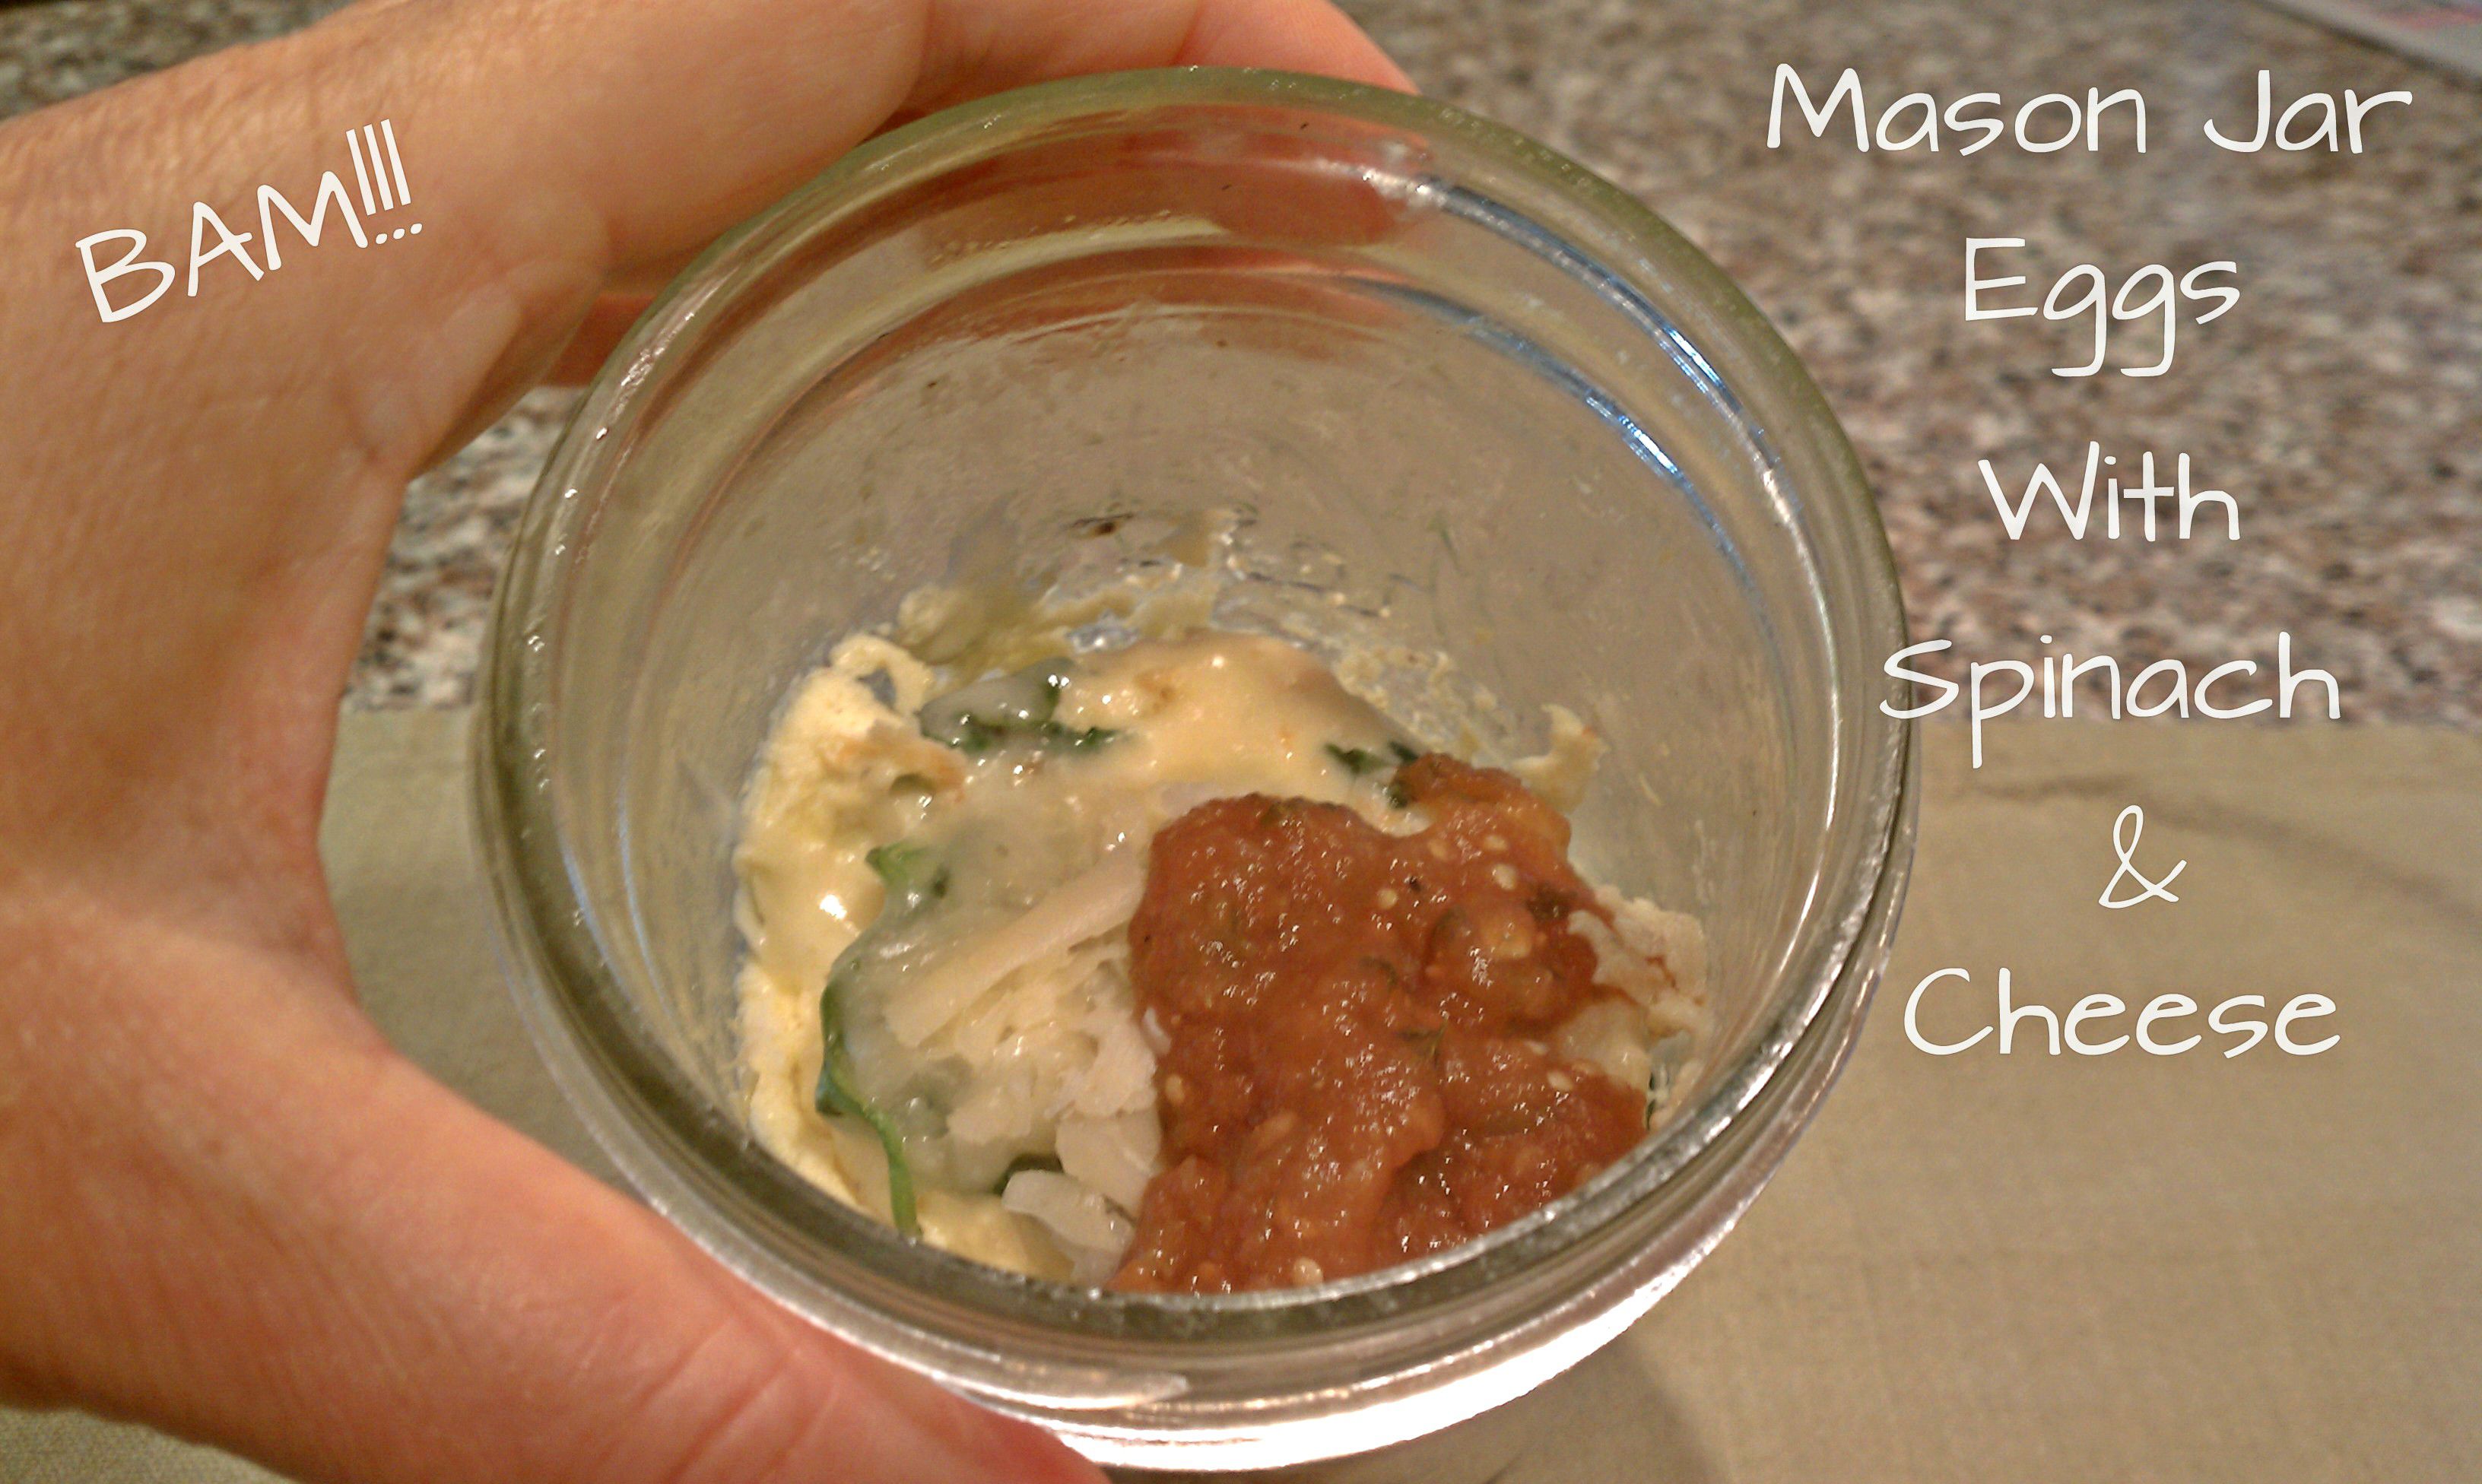 Mason Jar Eggs with Spinach & Cheese